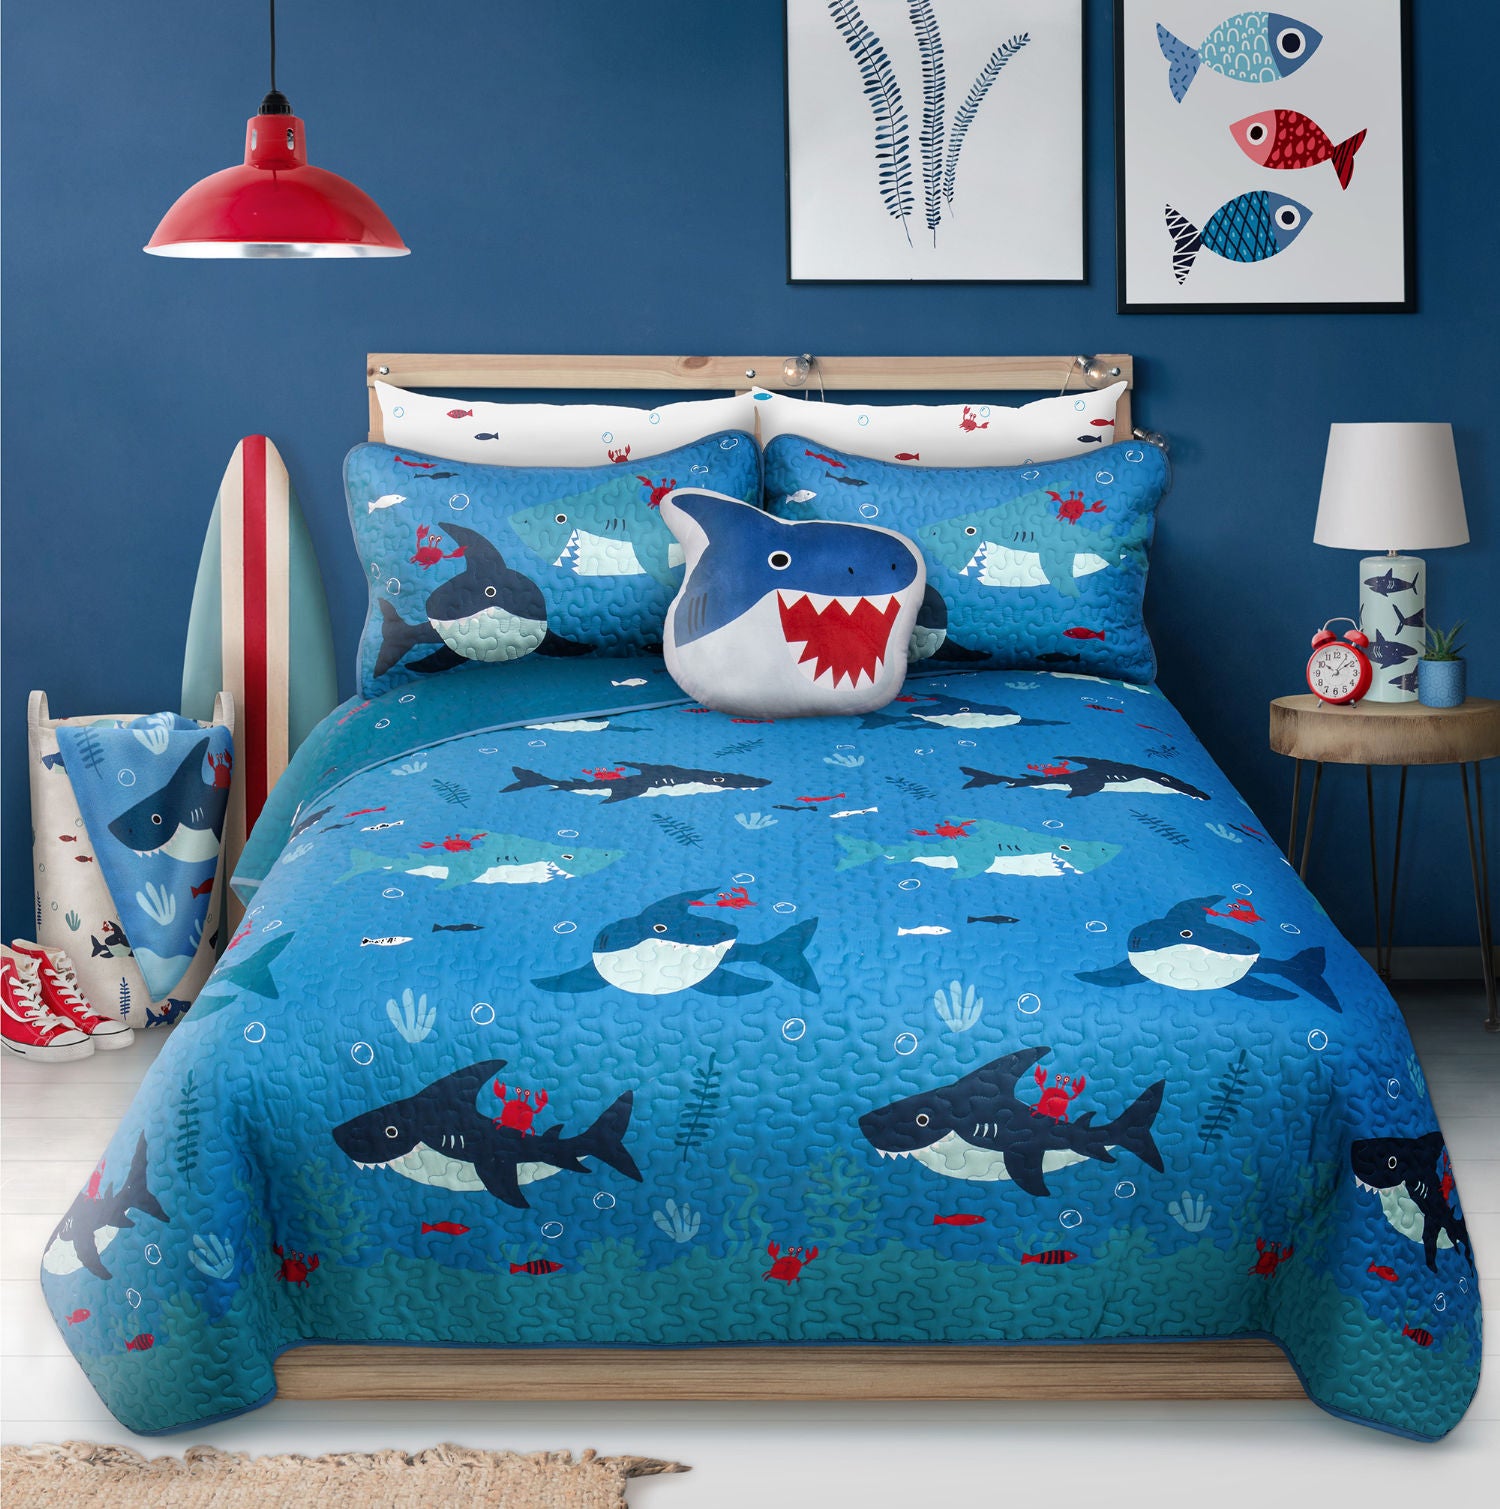 Woven Printed Quilt Bedding Set 2 Piece Twin Shark